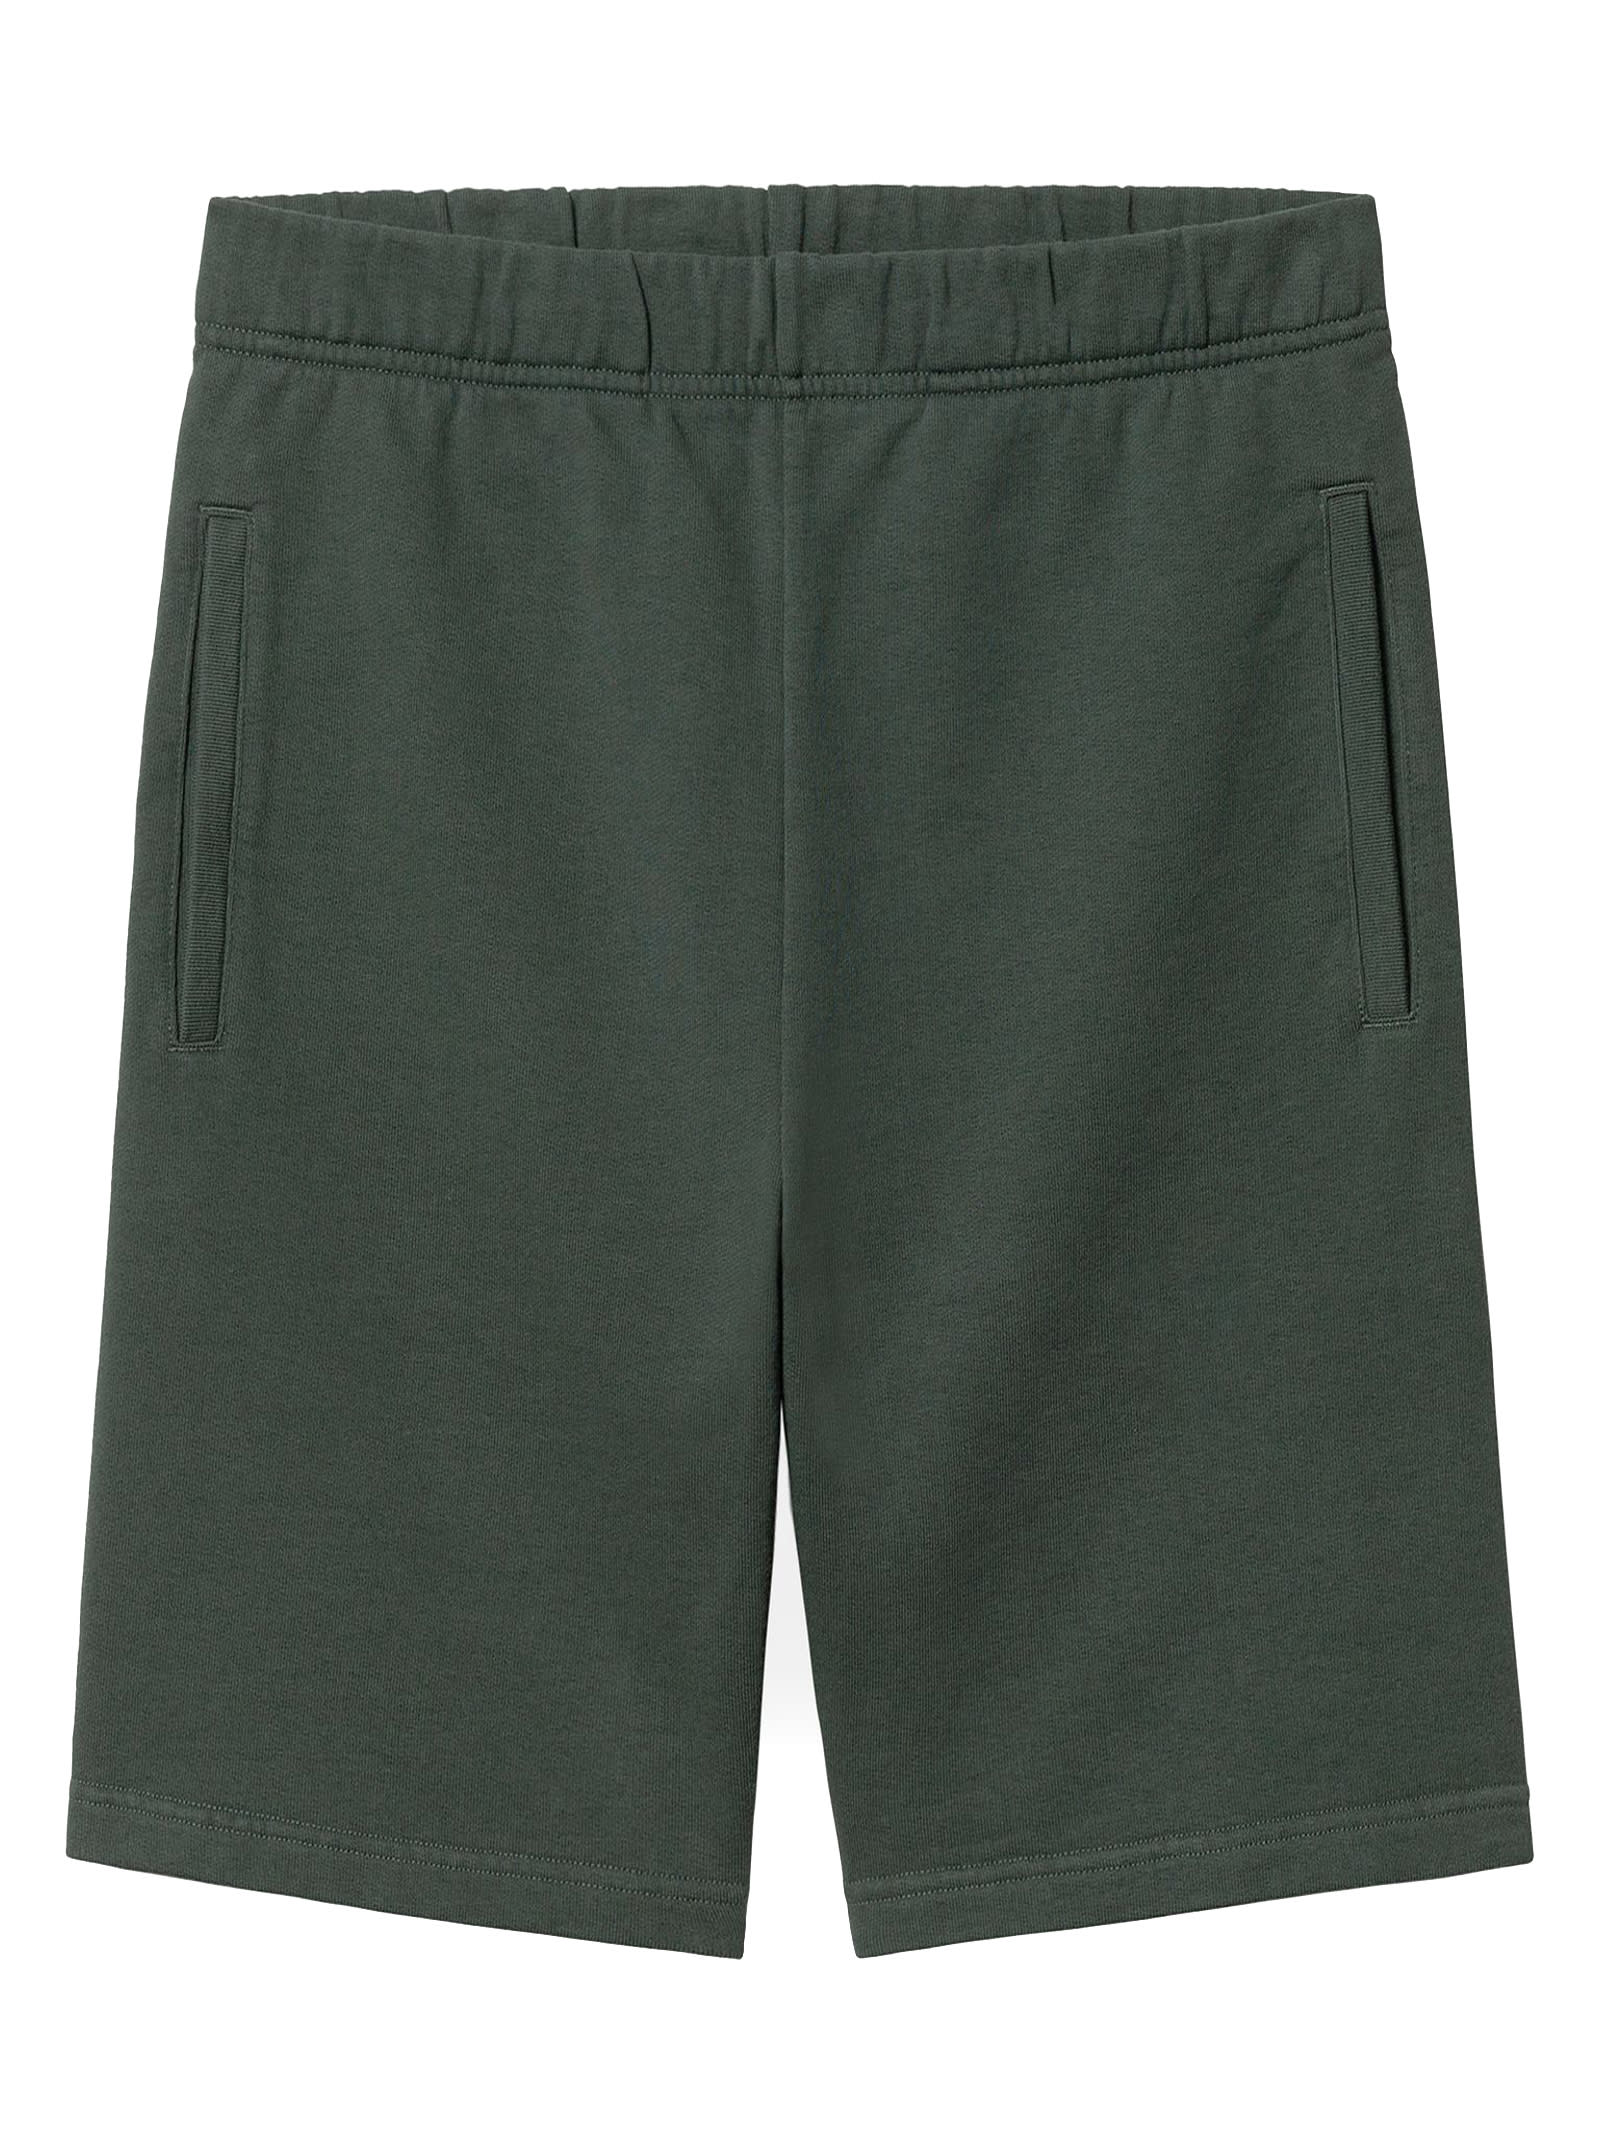 Carhartt Dark Green Cotton Shorts